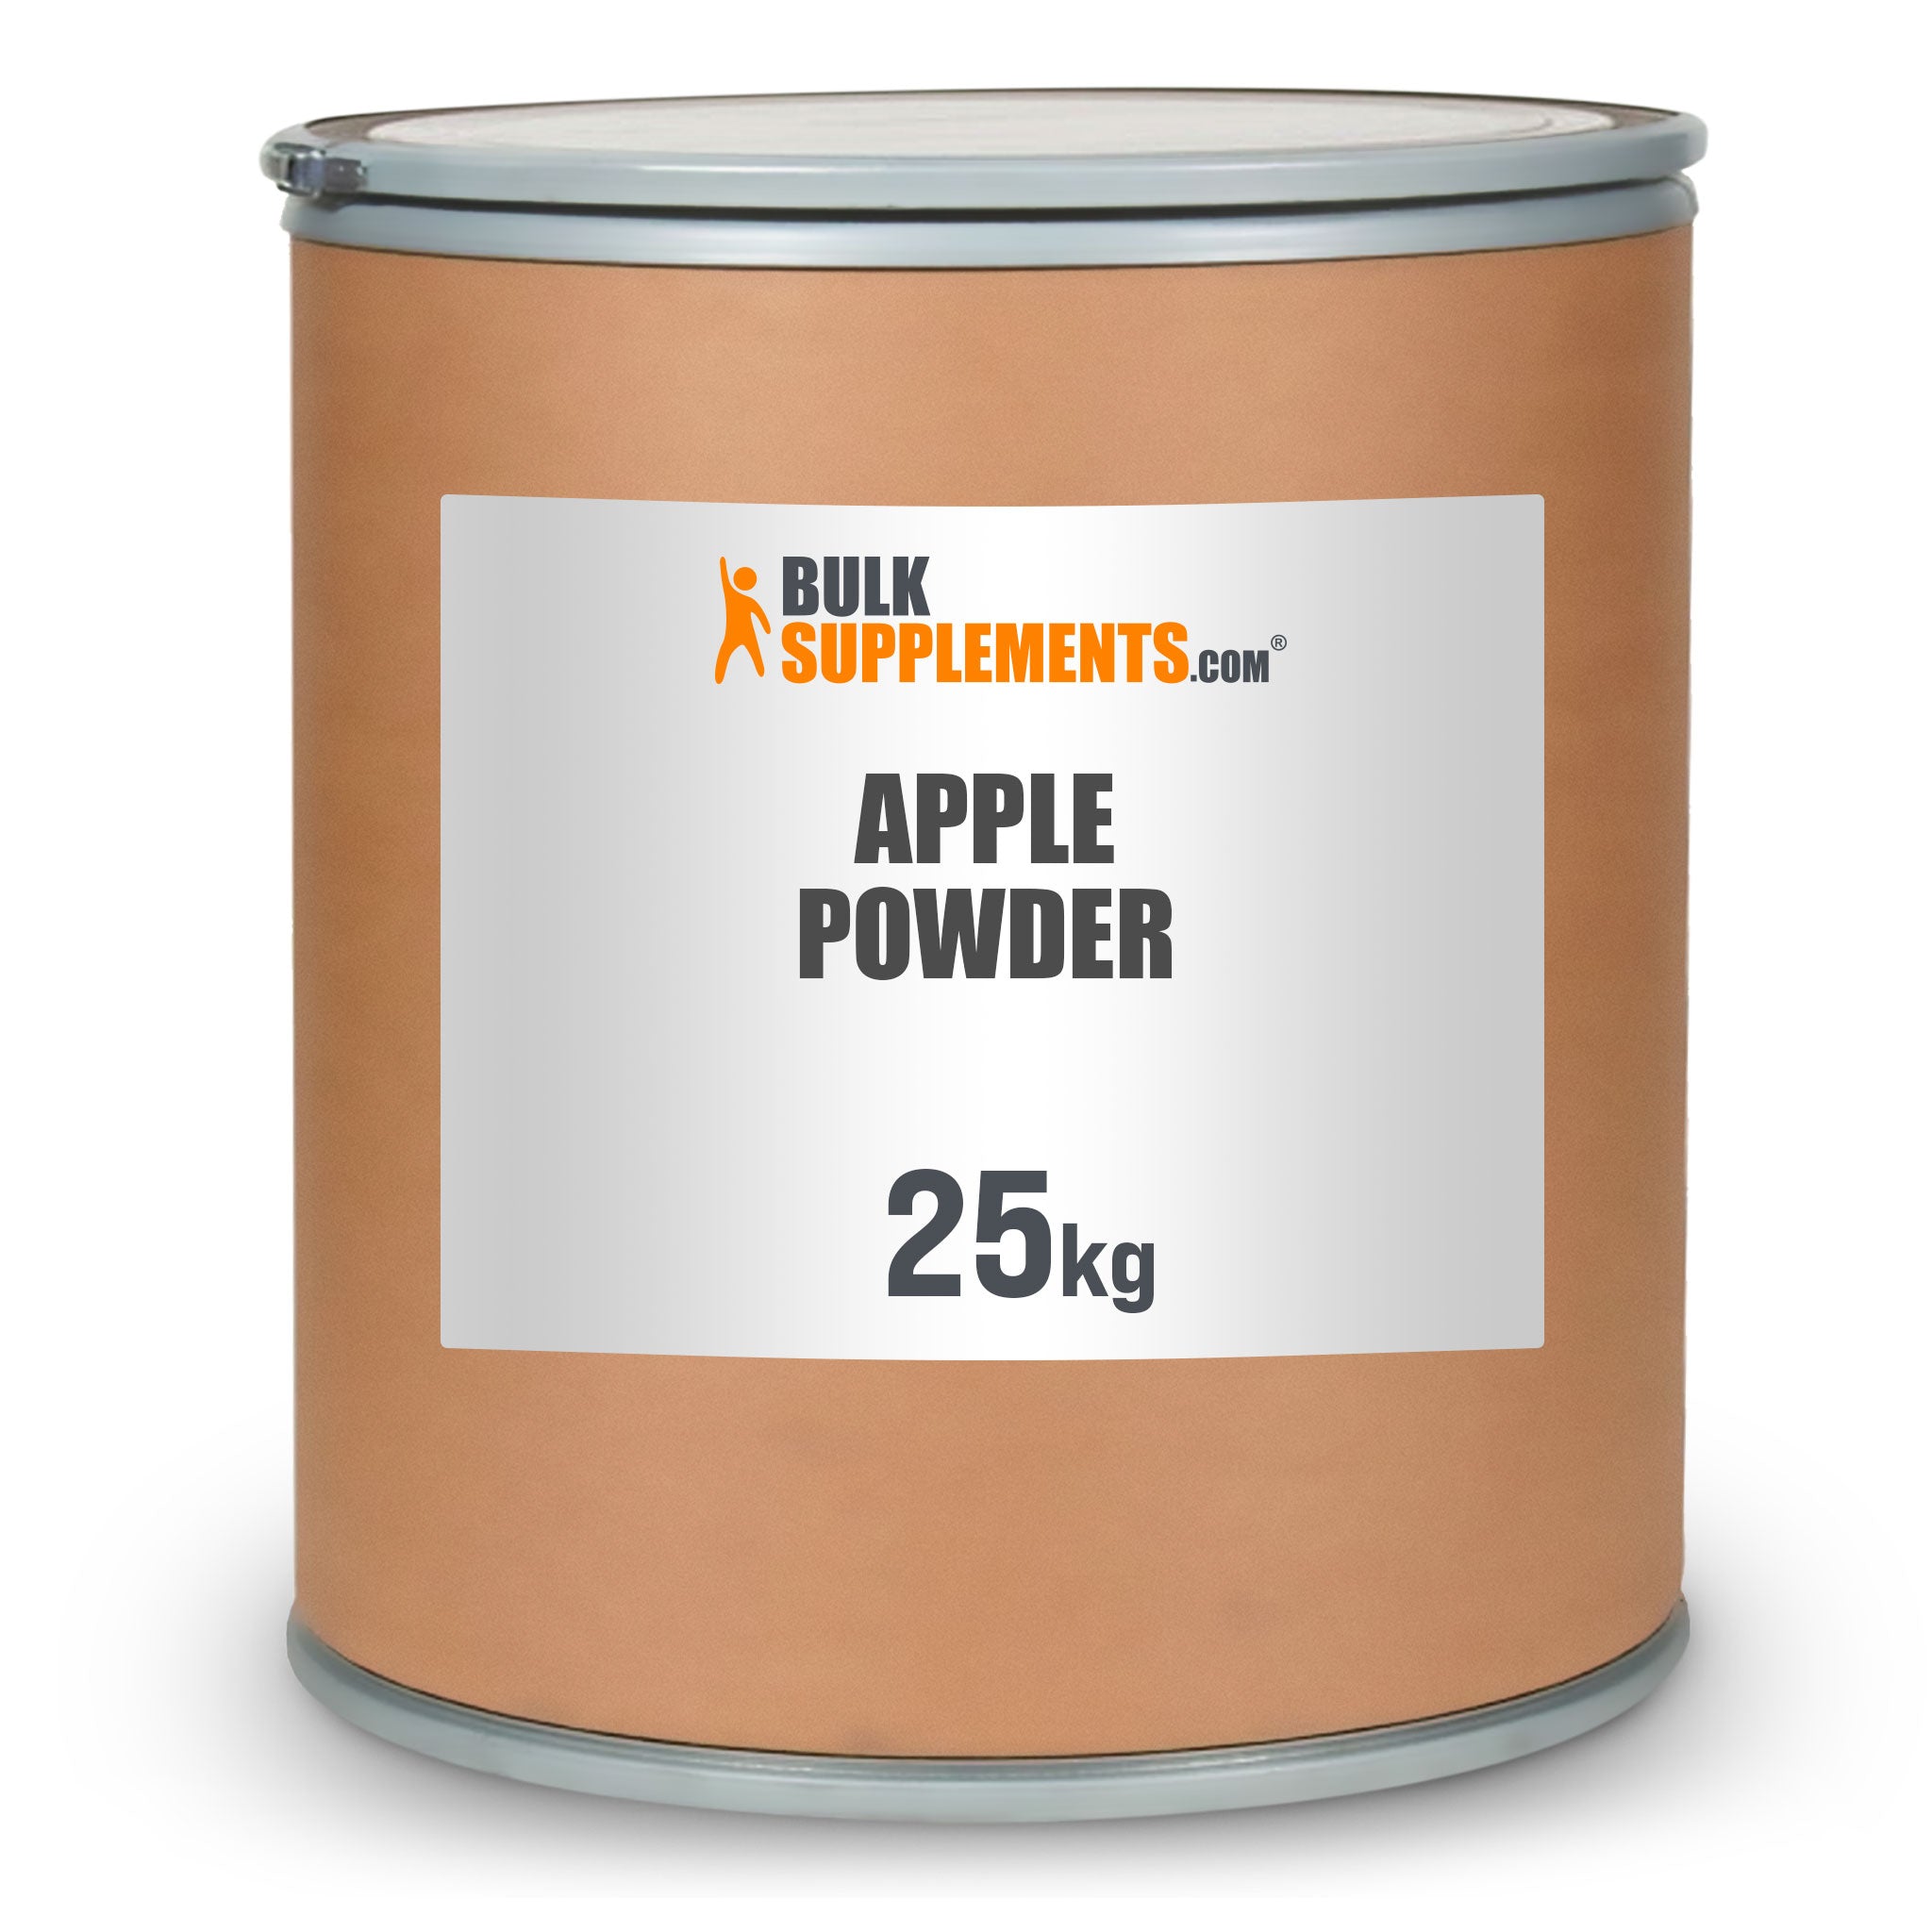 fiber powder